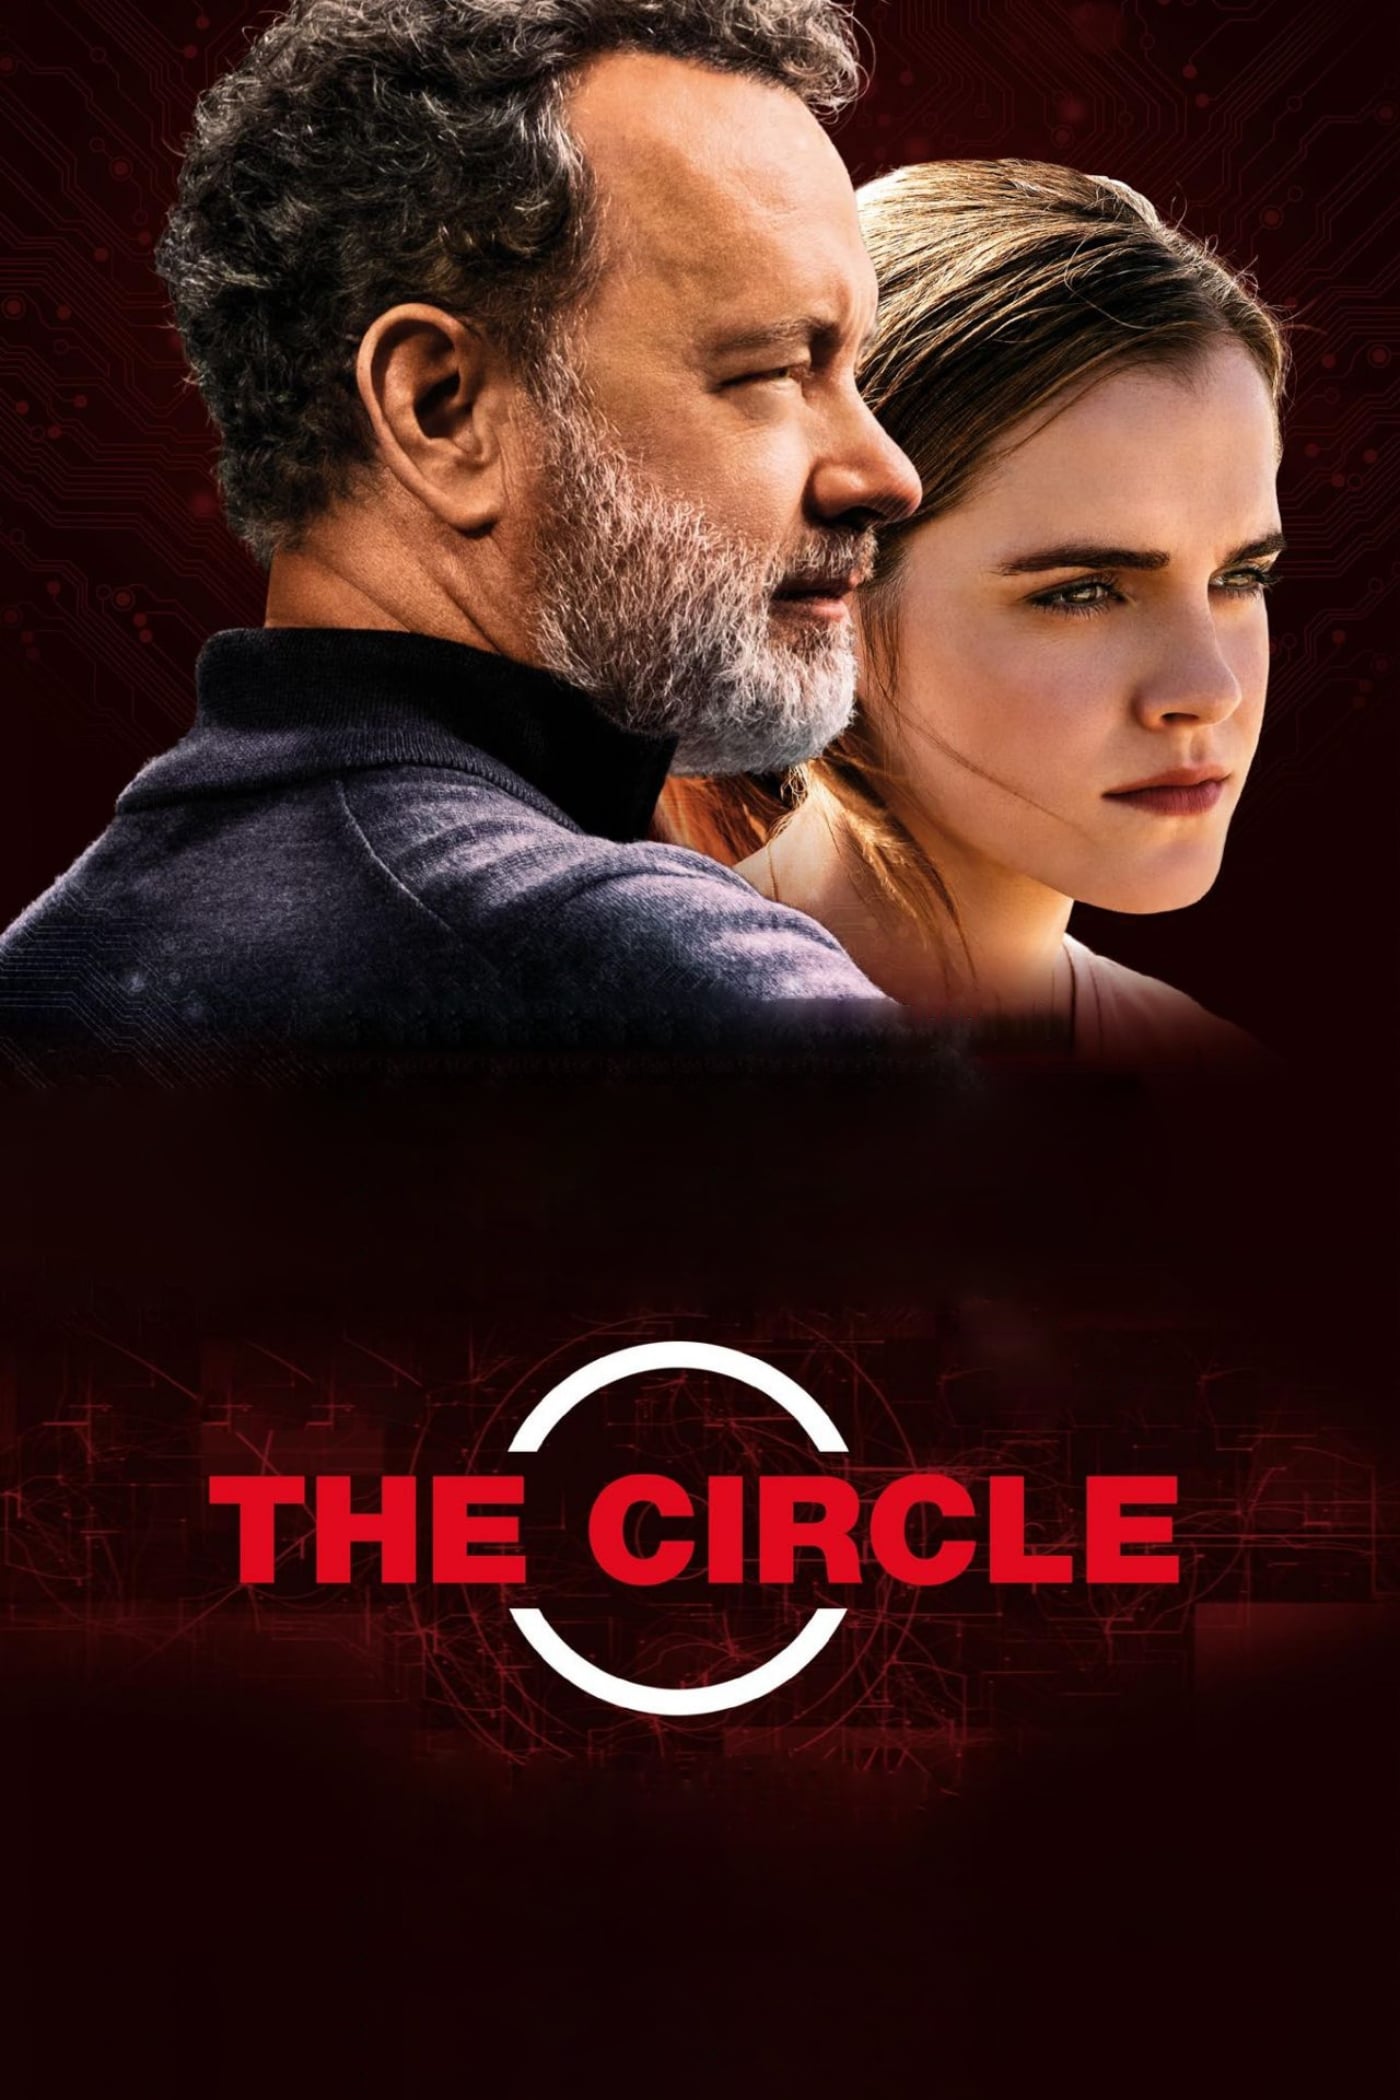 the circle movie essay